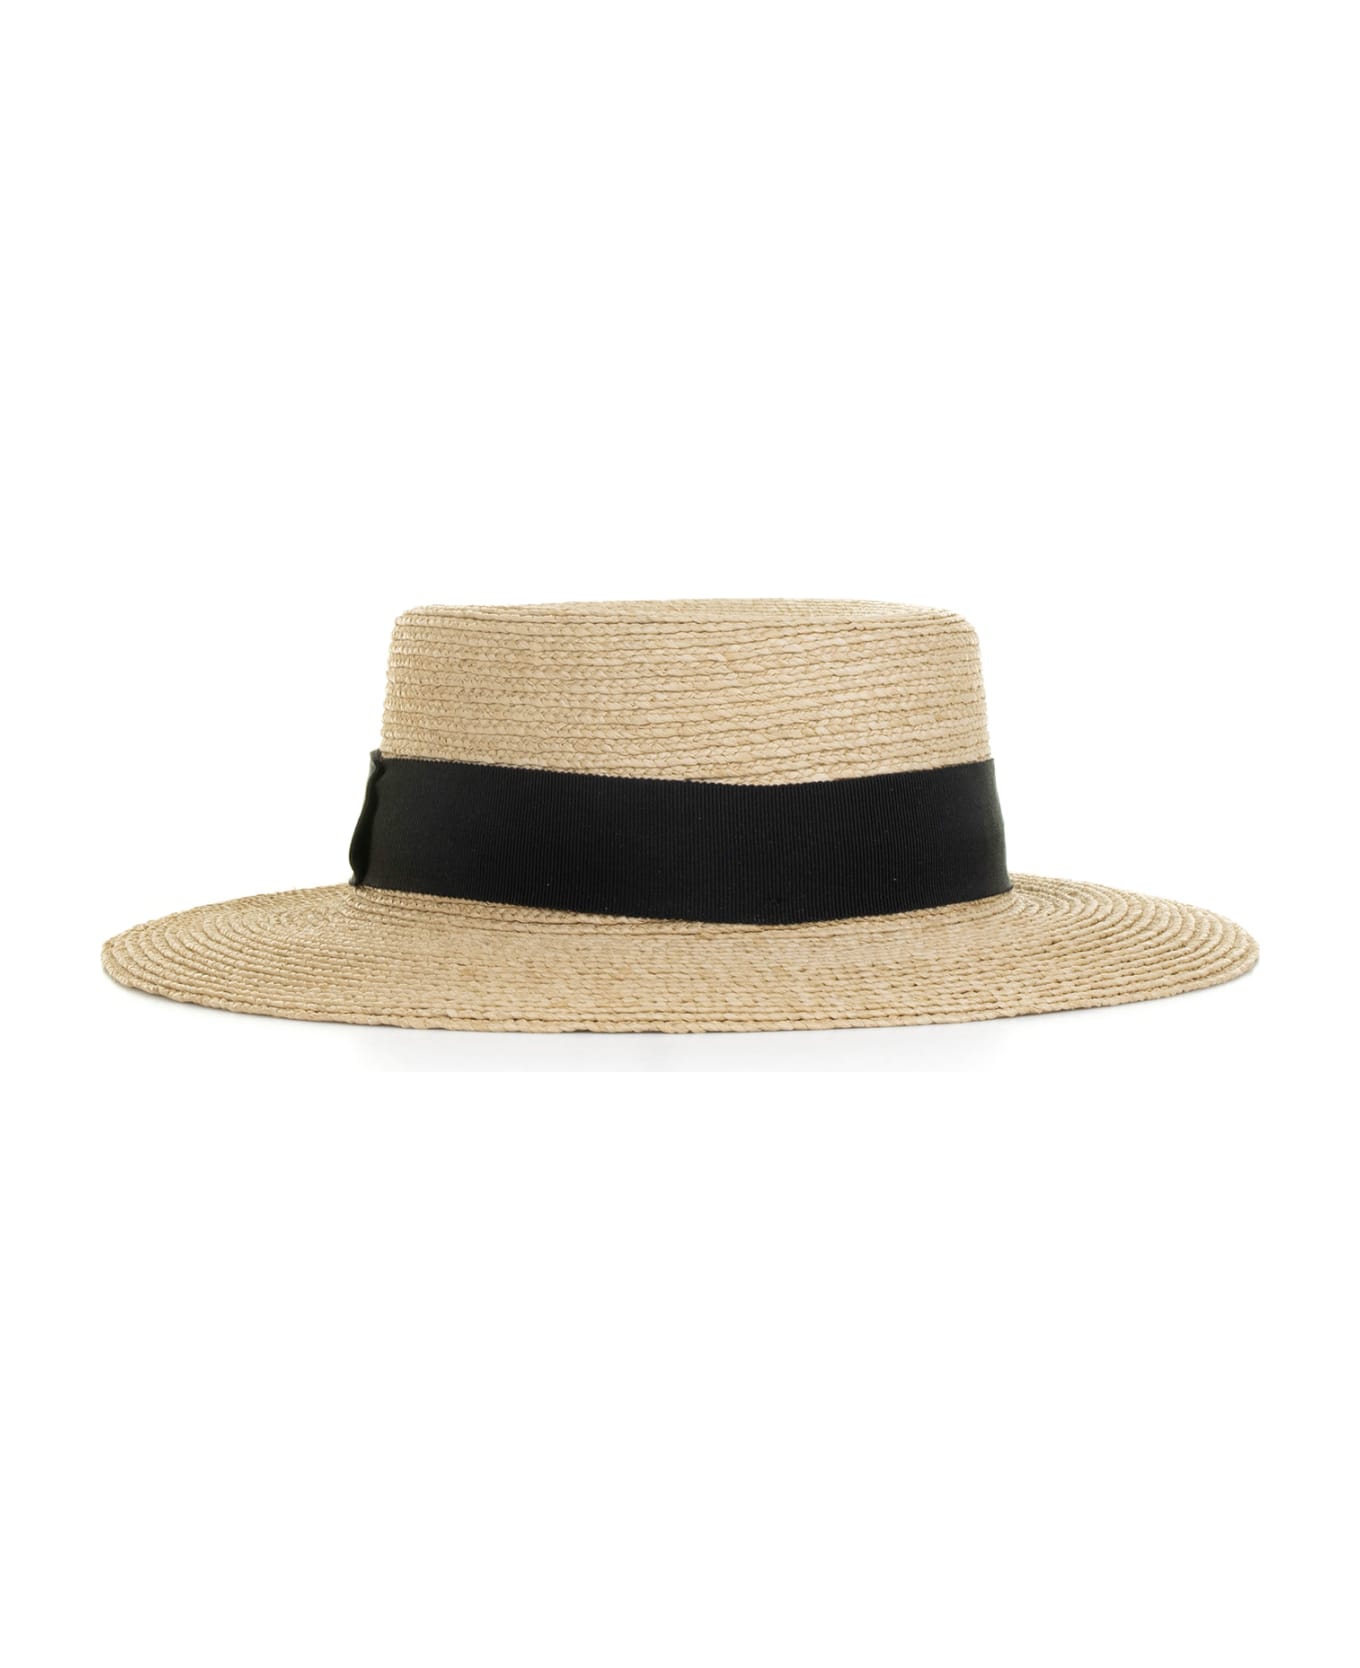 Helen Kaminski Hat - NATURAL BLACK 帽子